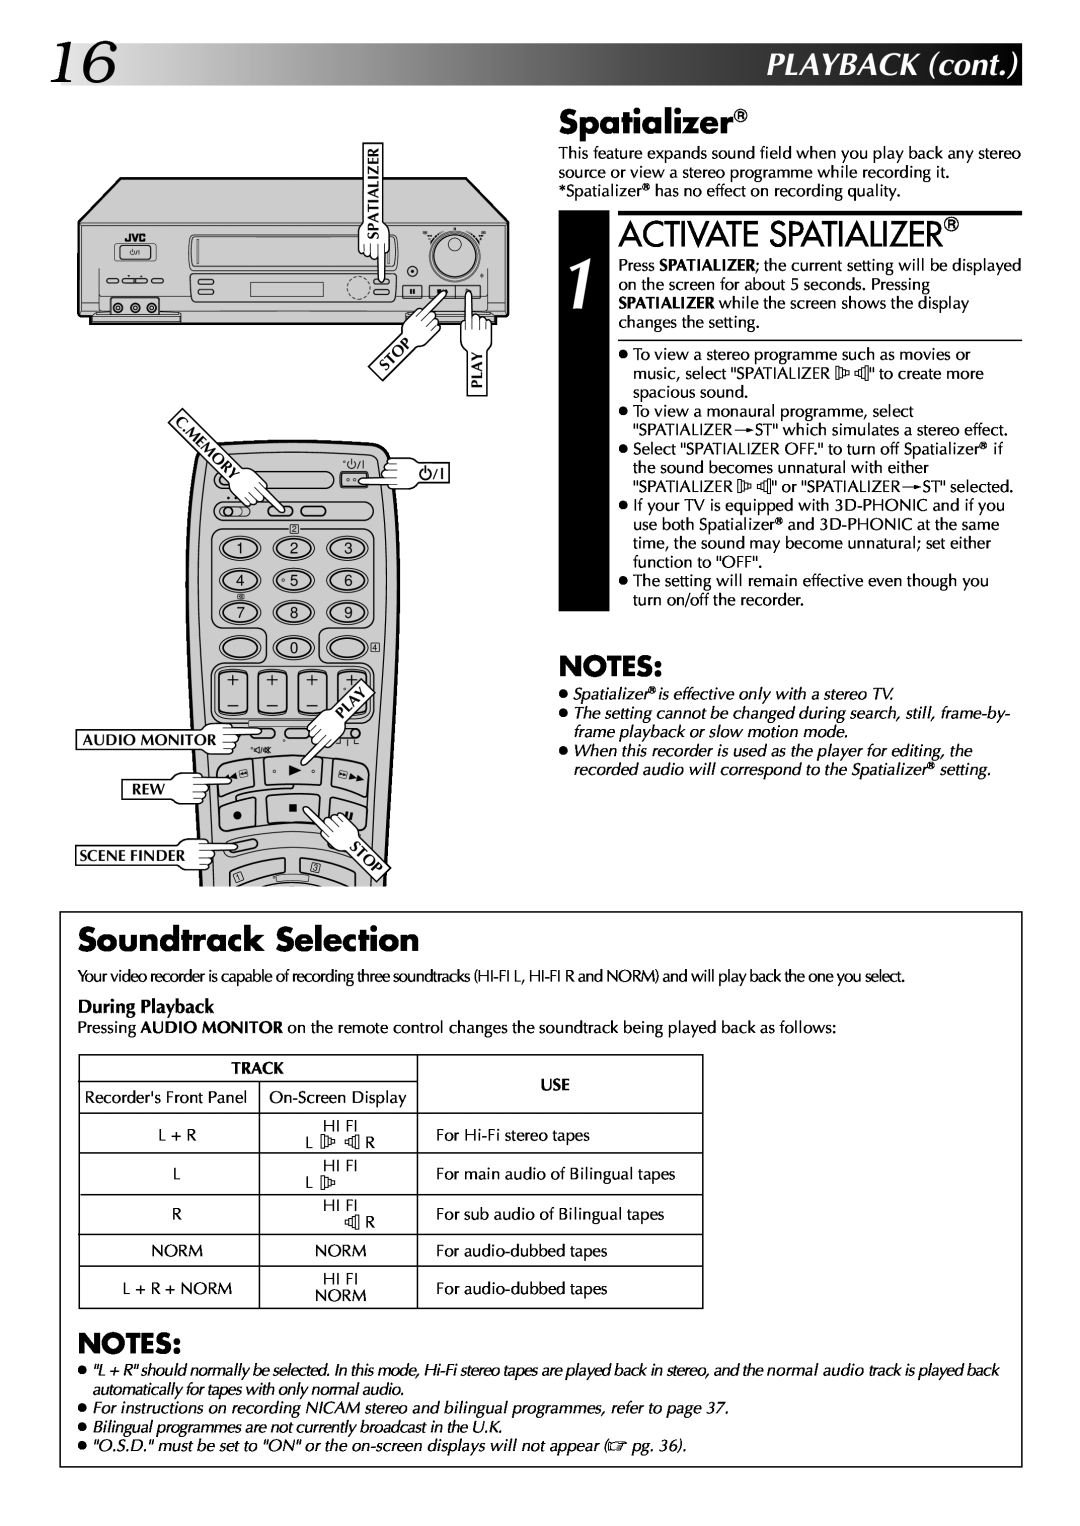 JVC HR-DD845EK setup guide Activate Spatializer, Soundtrack Selection, PLAYBACK cont, Stop, During Playback 